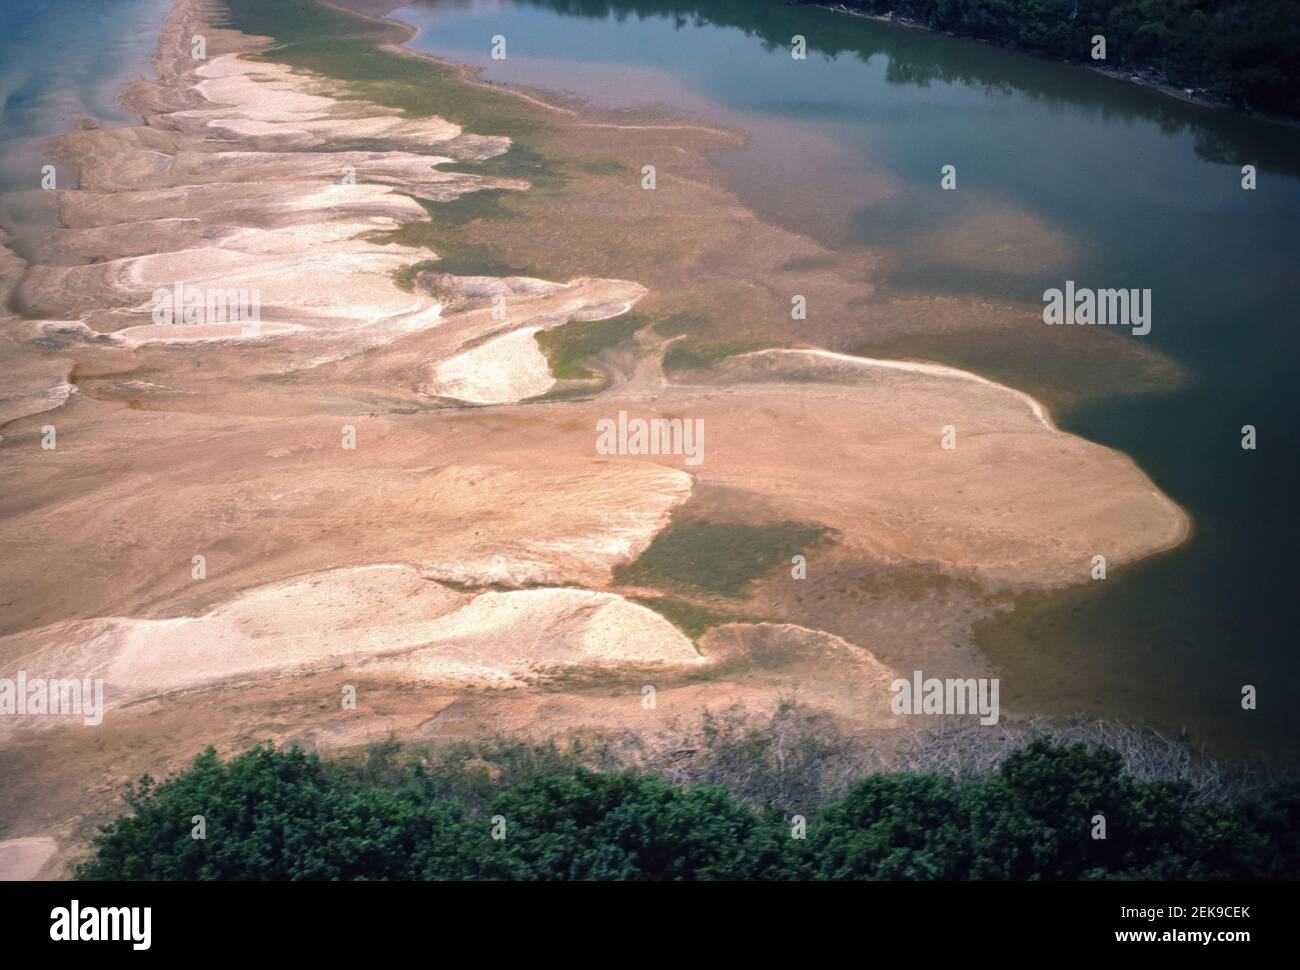 ORINOCO RIVER, APURE STATE, VENEZUELA - Aerial of sand bars on Orinoco River tributary during dry season. Stock Photo